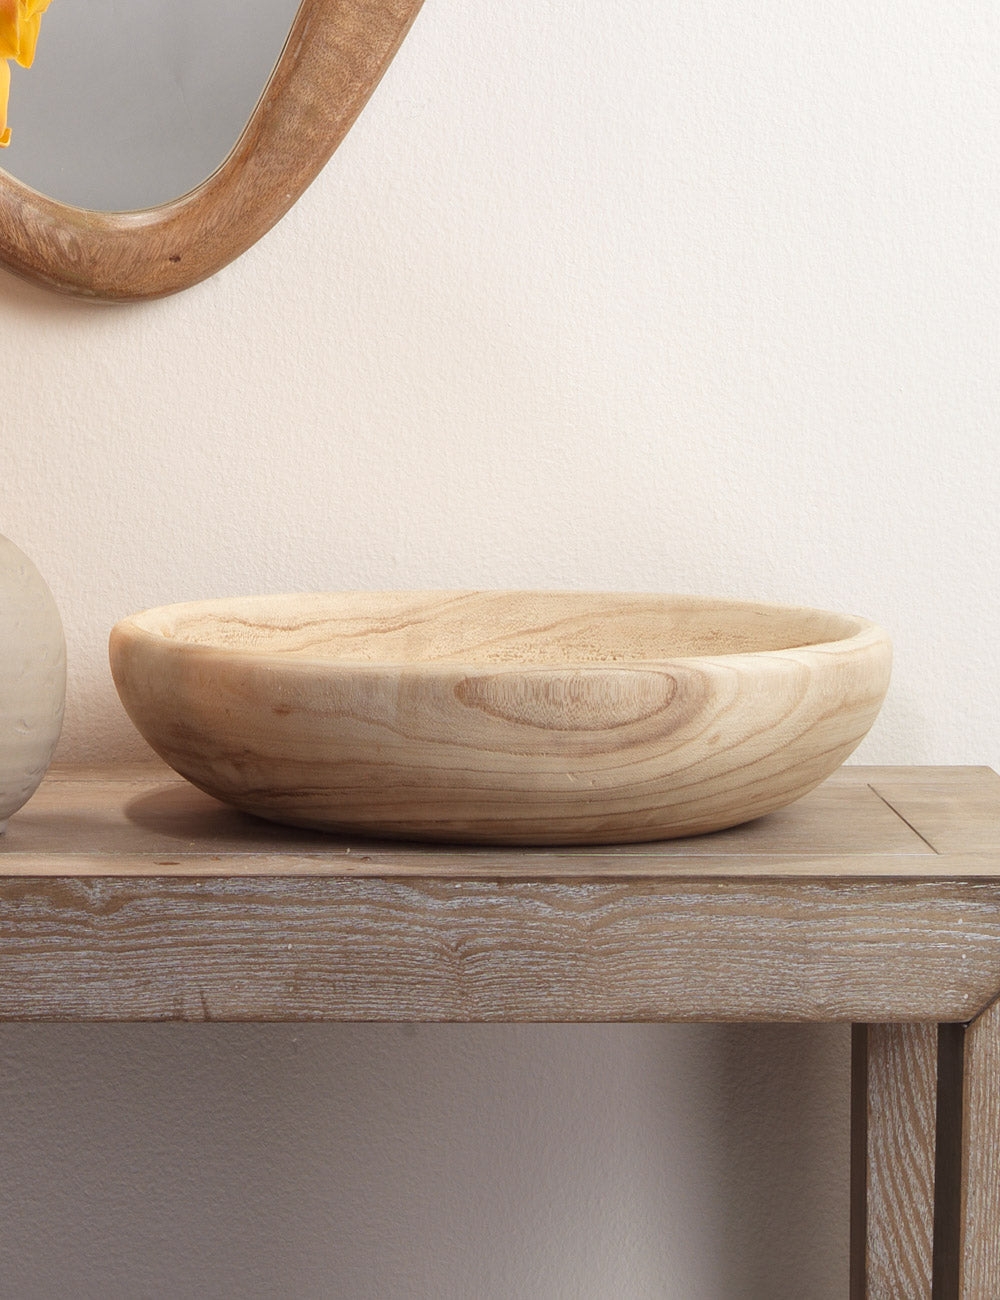 Sada Wooden Bowl - Image 0